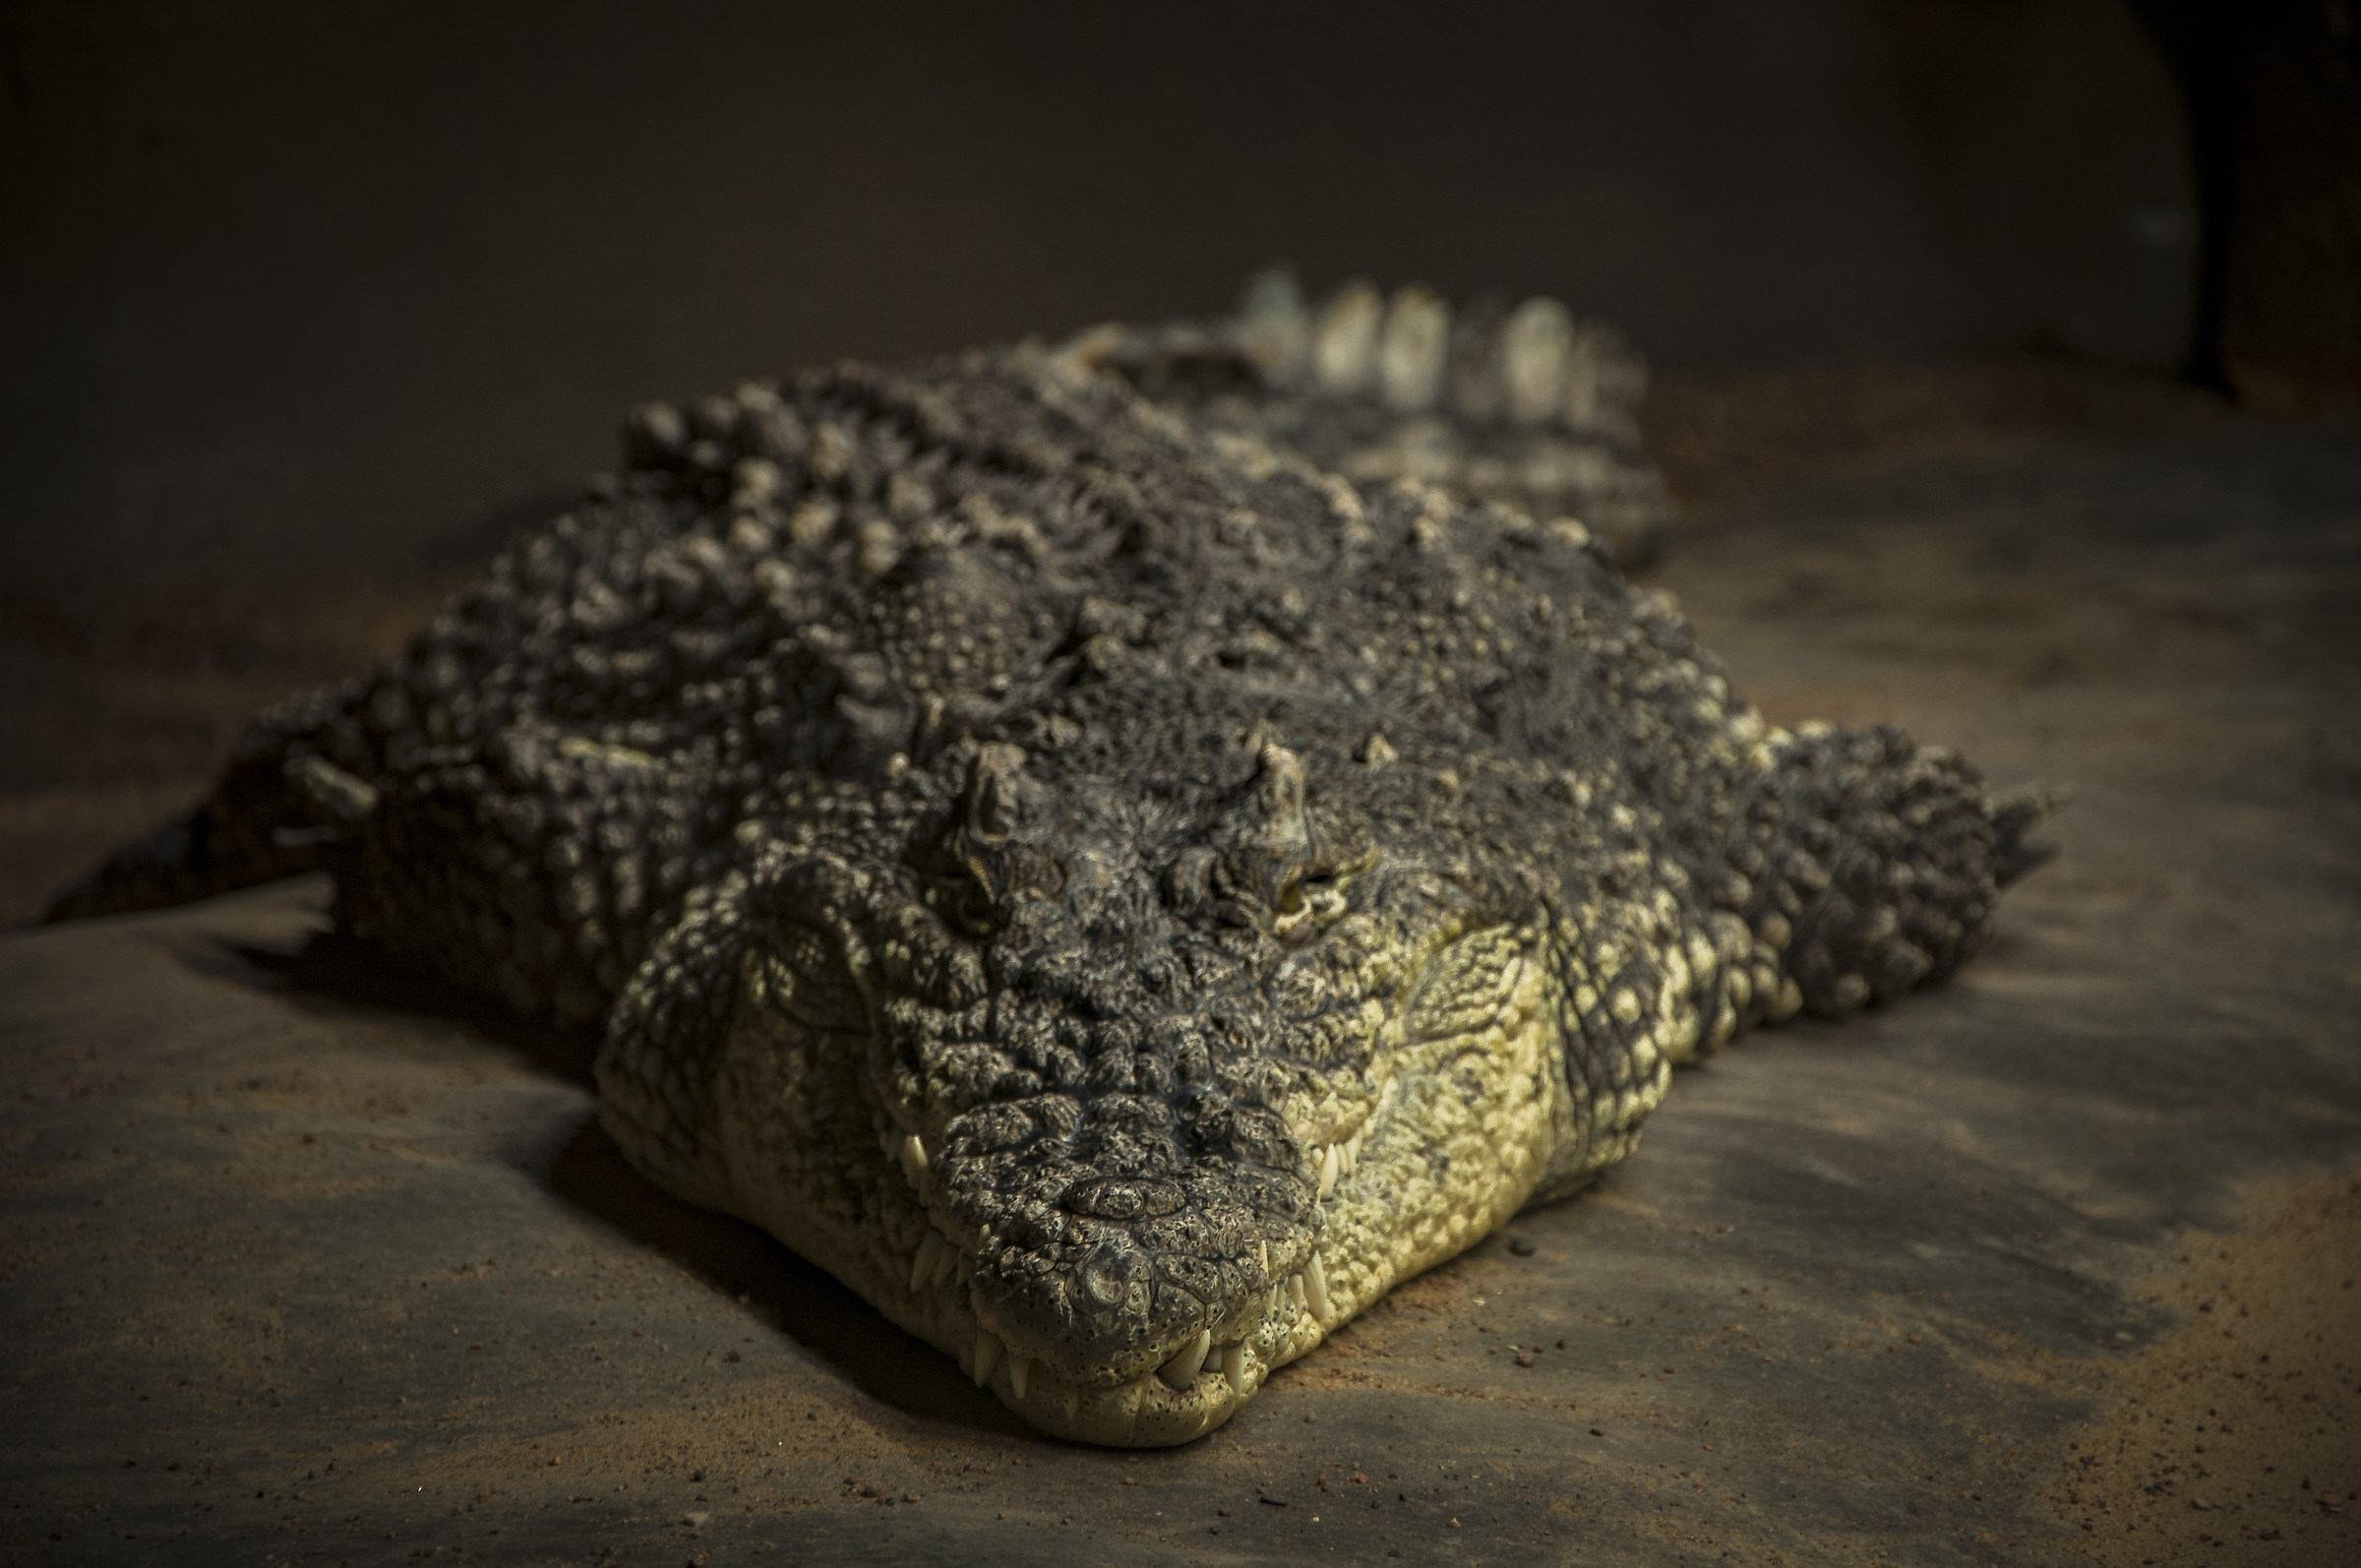 Do not awaken the sleeping crocodile ......